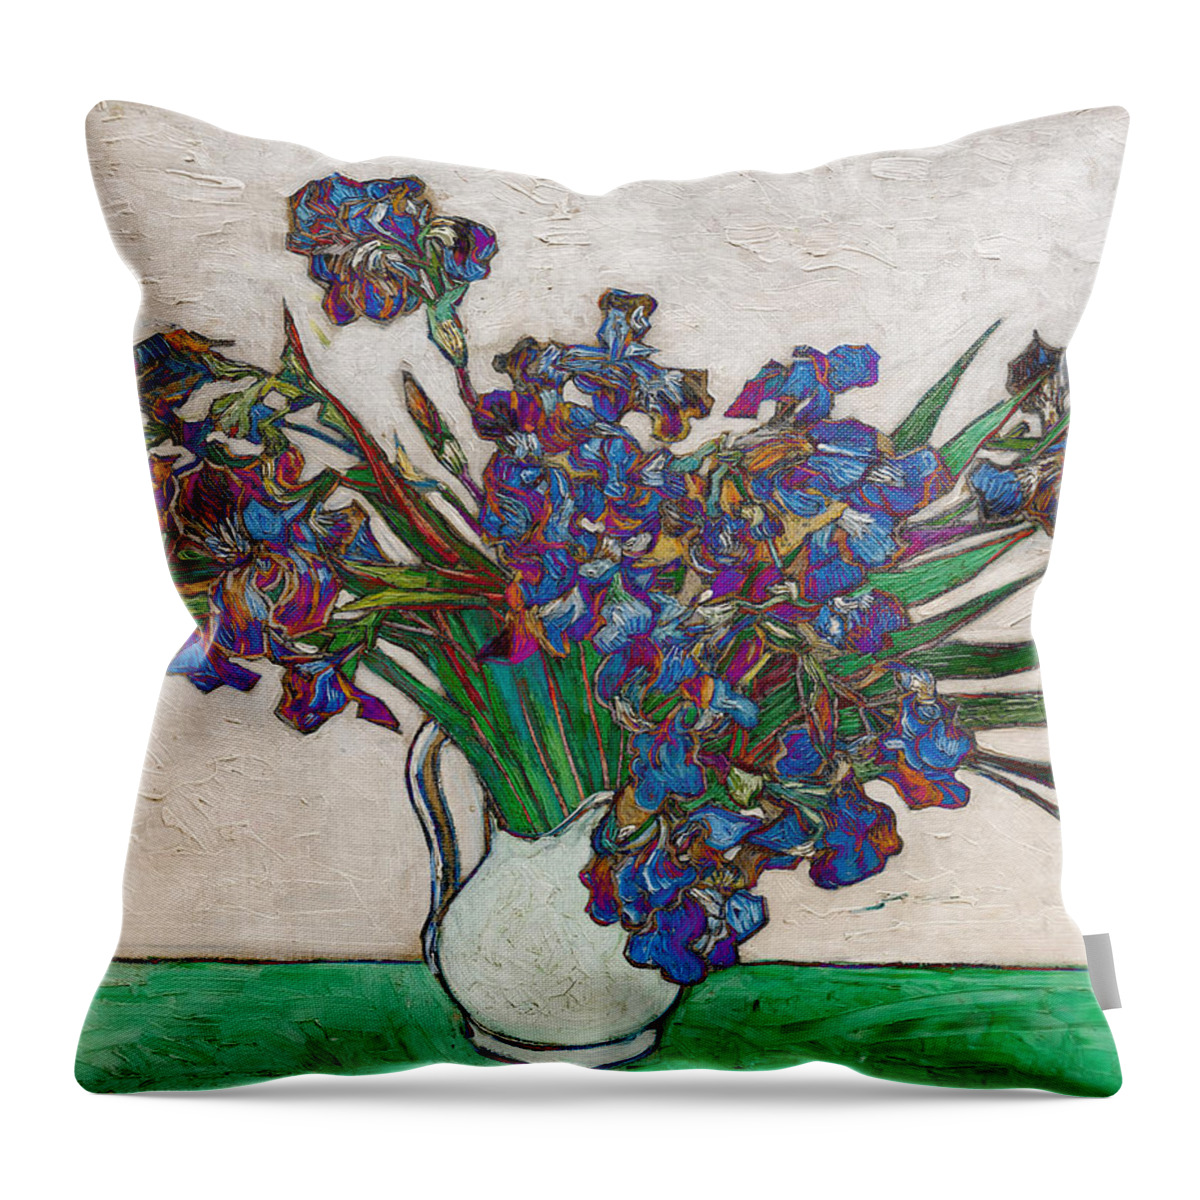 Post Modern Throw Pillow featuring the digital art Blend 16 van Gogh by David Bridburg